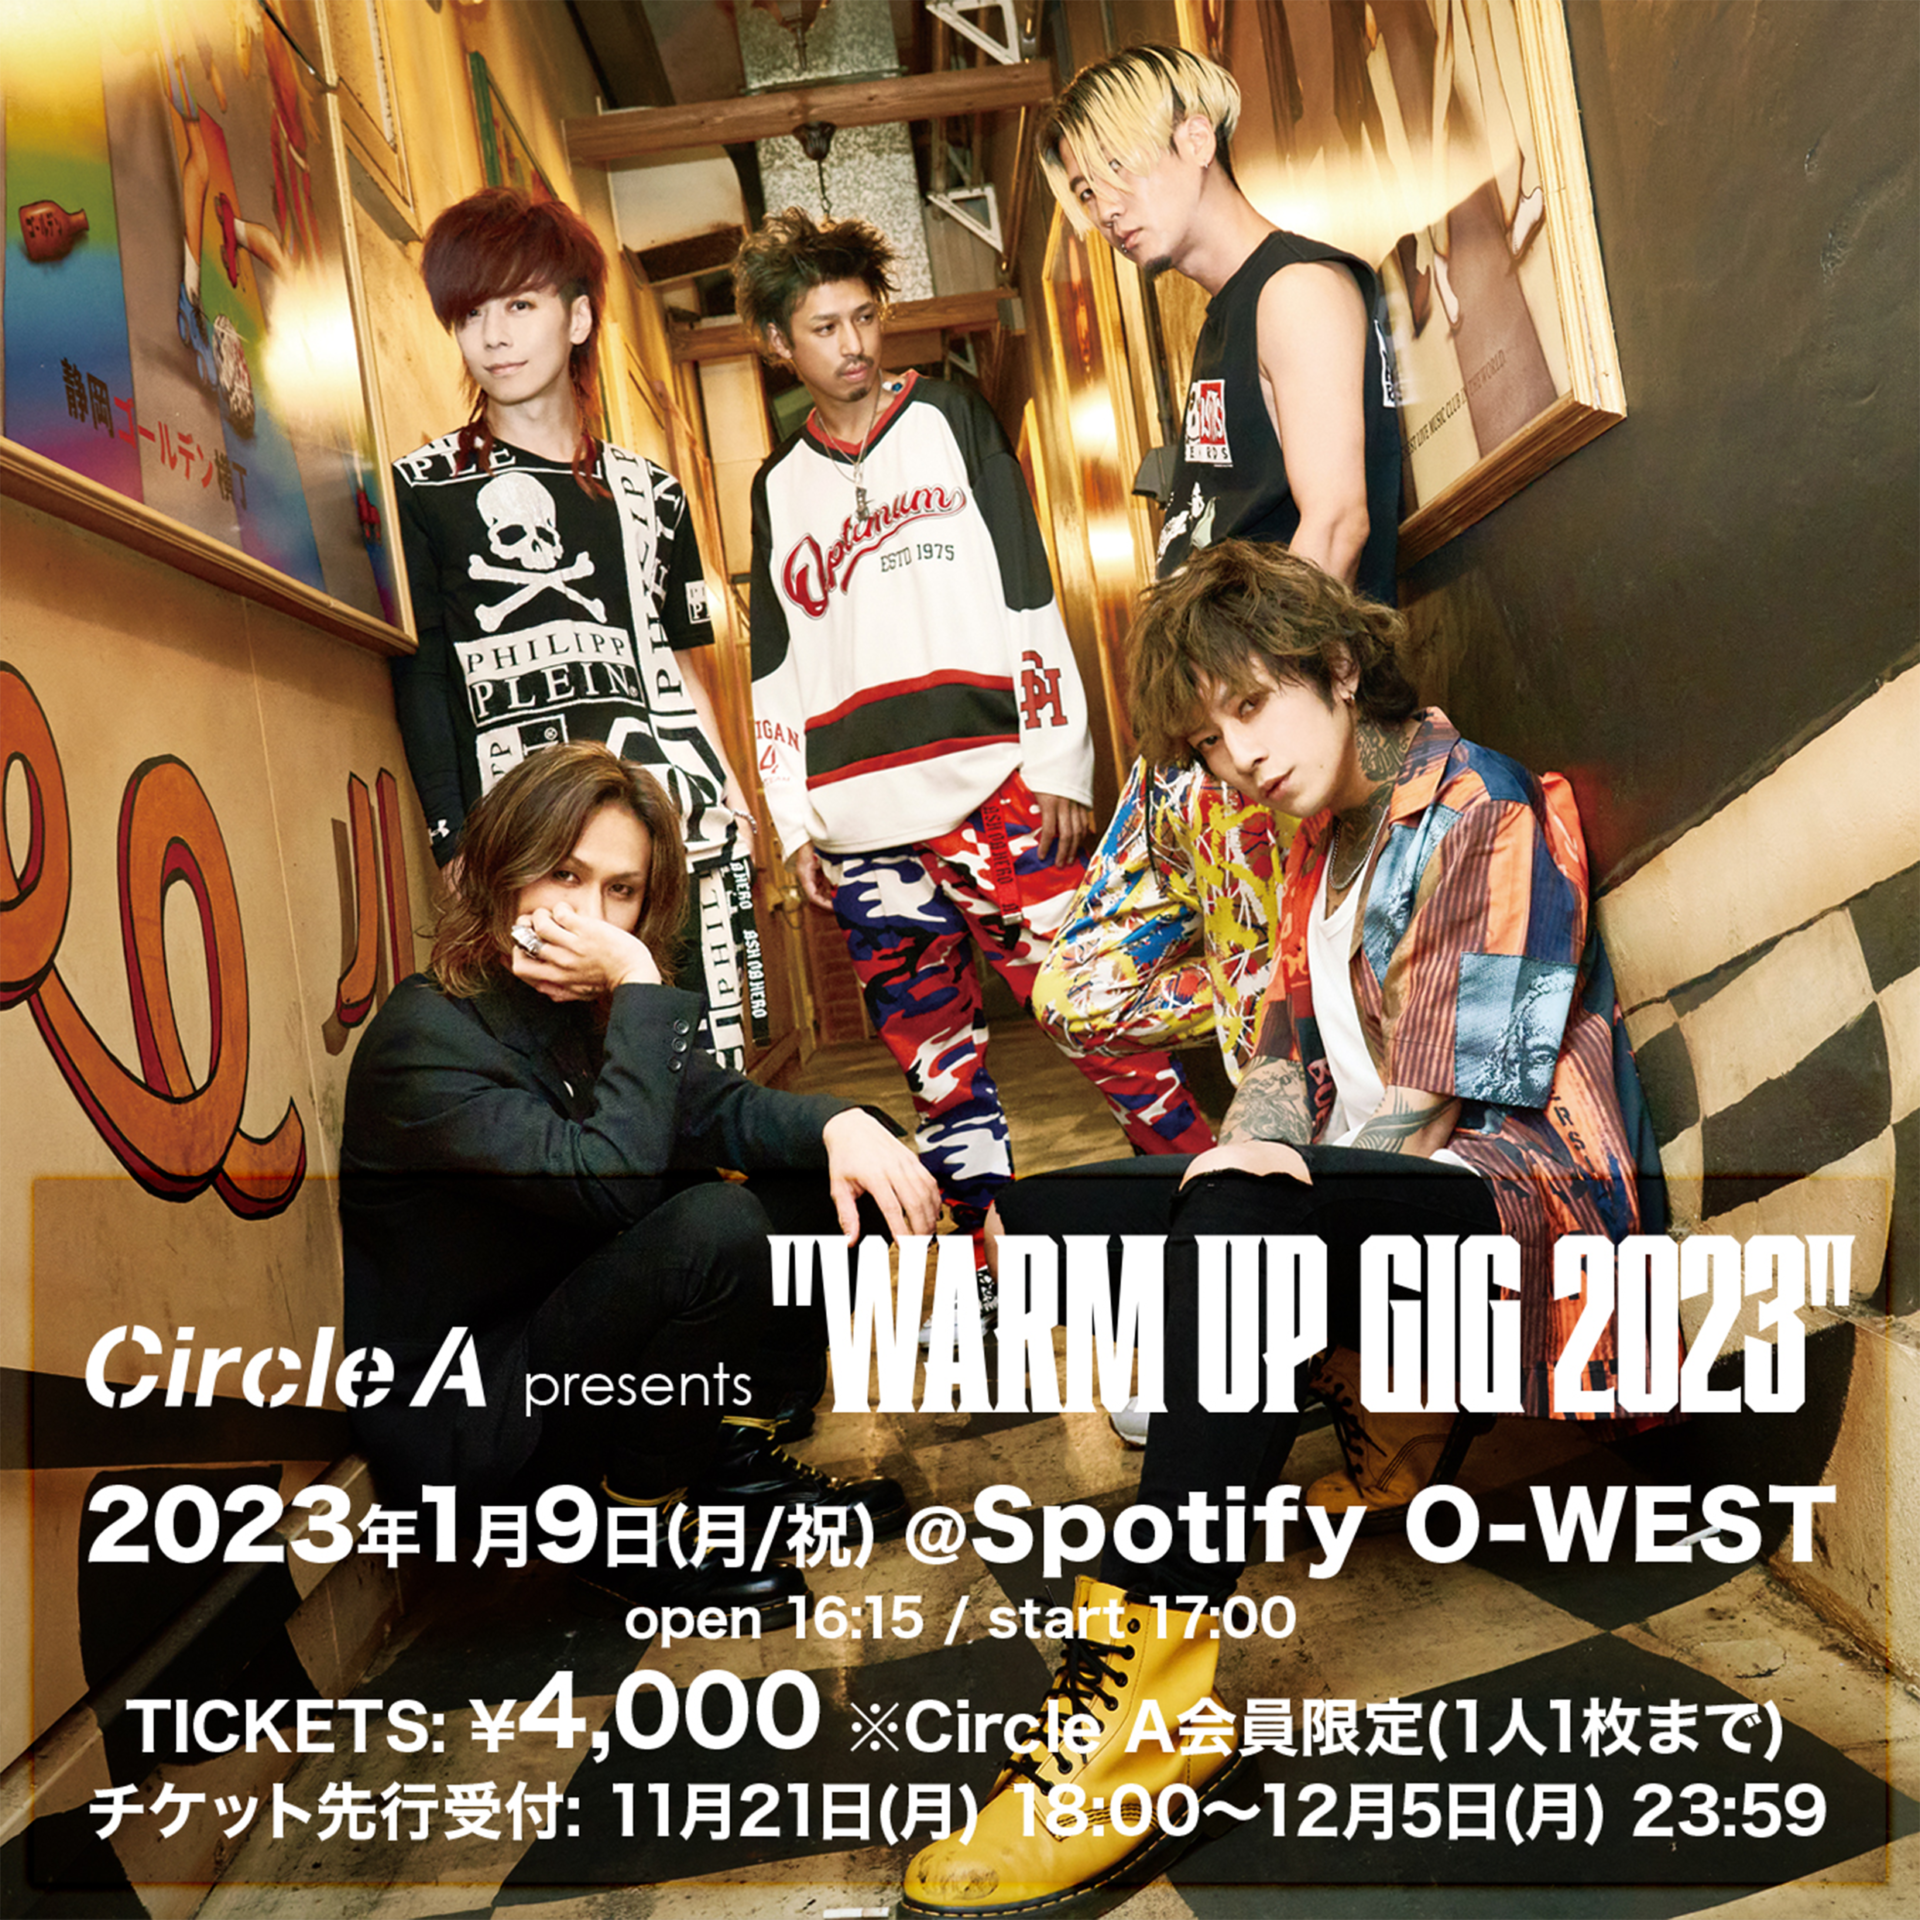 Ｃircle A presents WARM UP GIG 2023